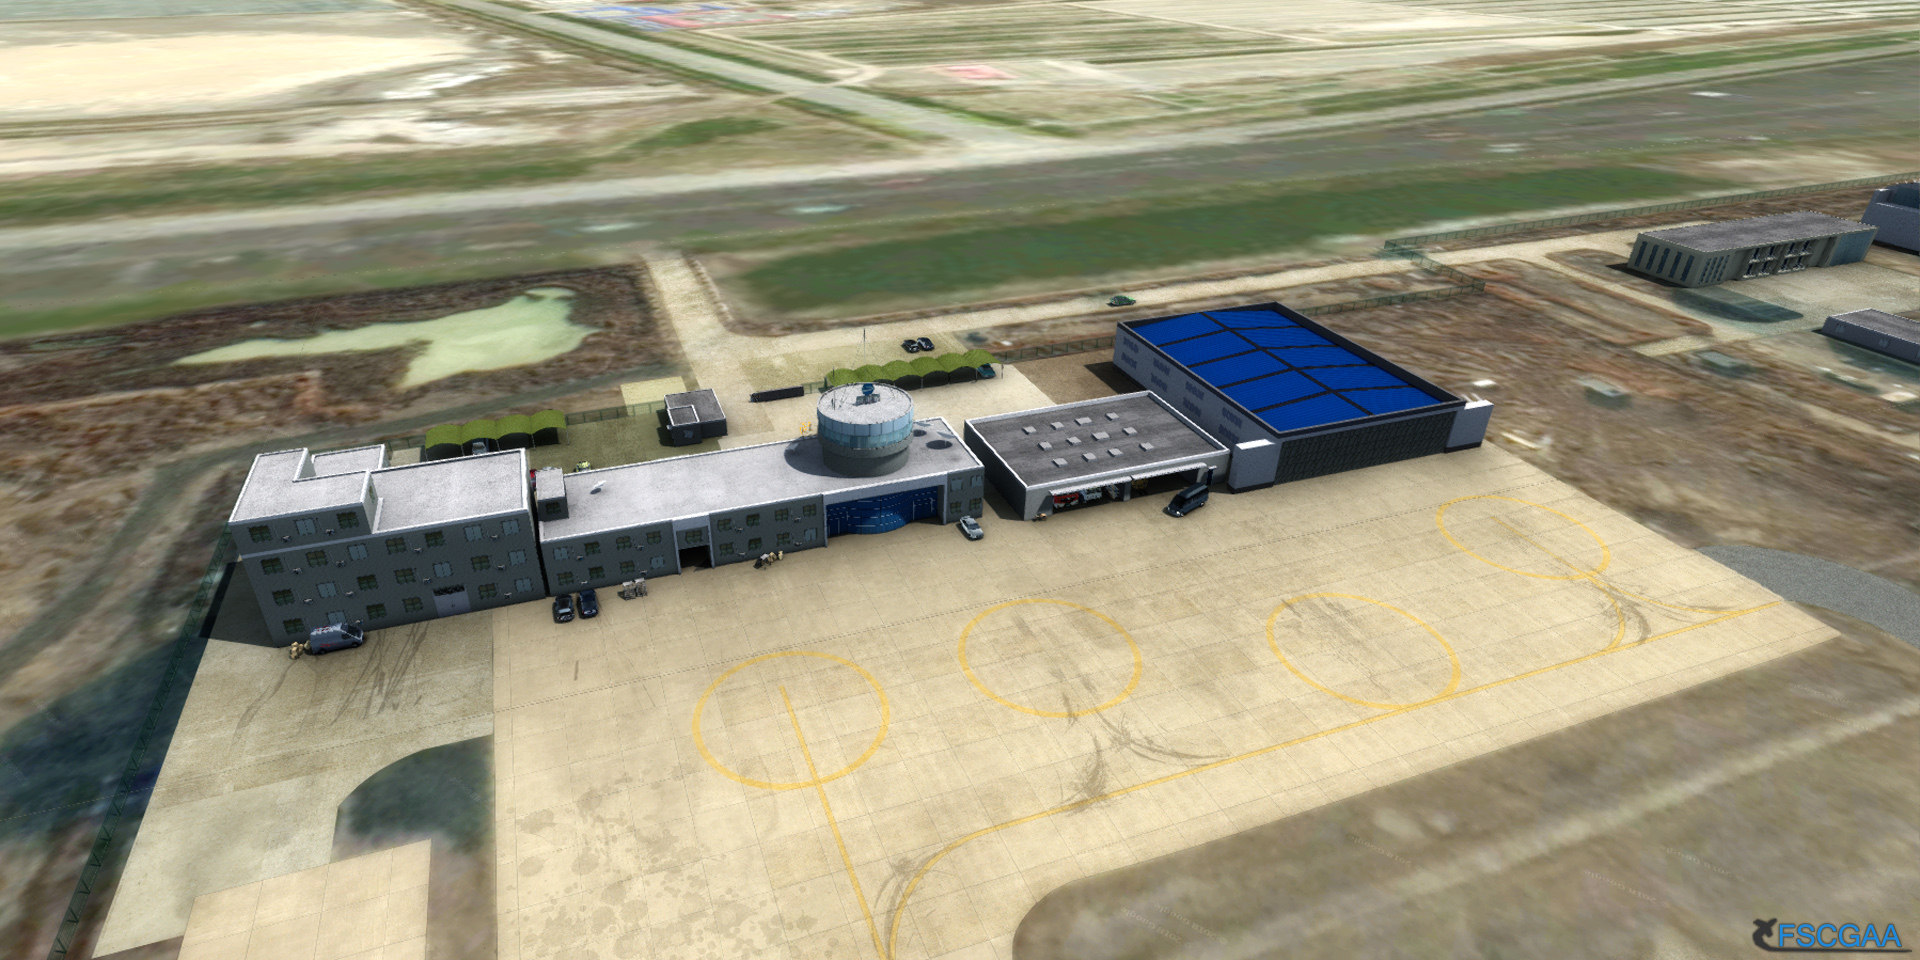 天津塘沽通航机场 for P3Dv4 发布-229 